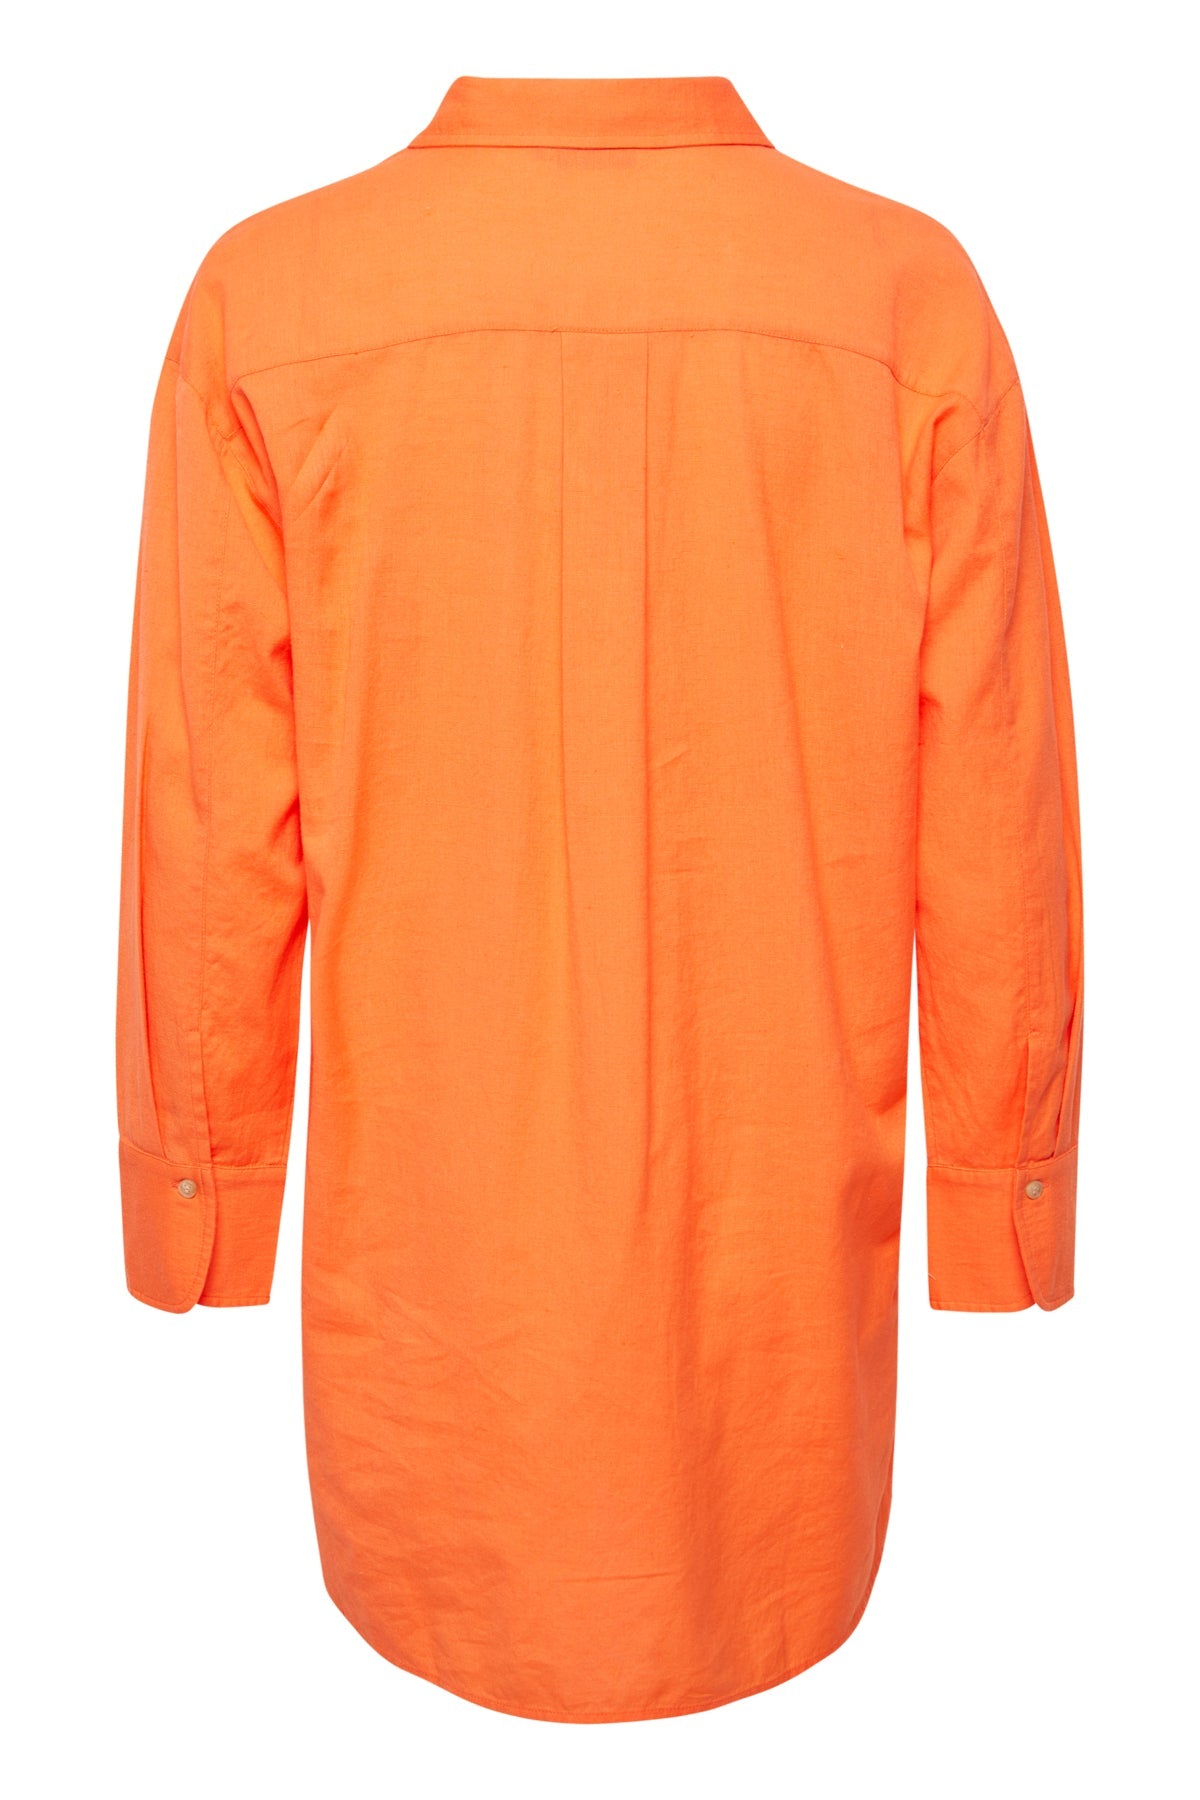 *Frmaddie Tunic Shirt Orange*